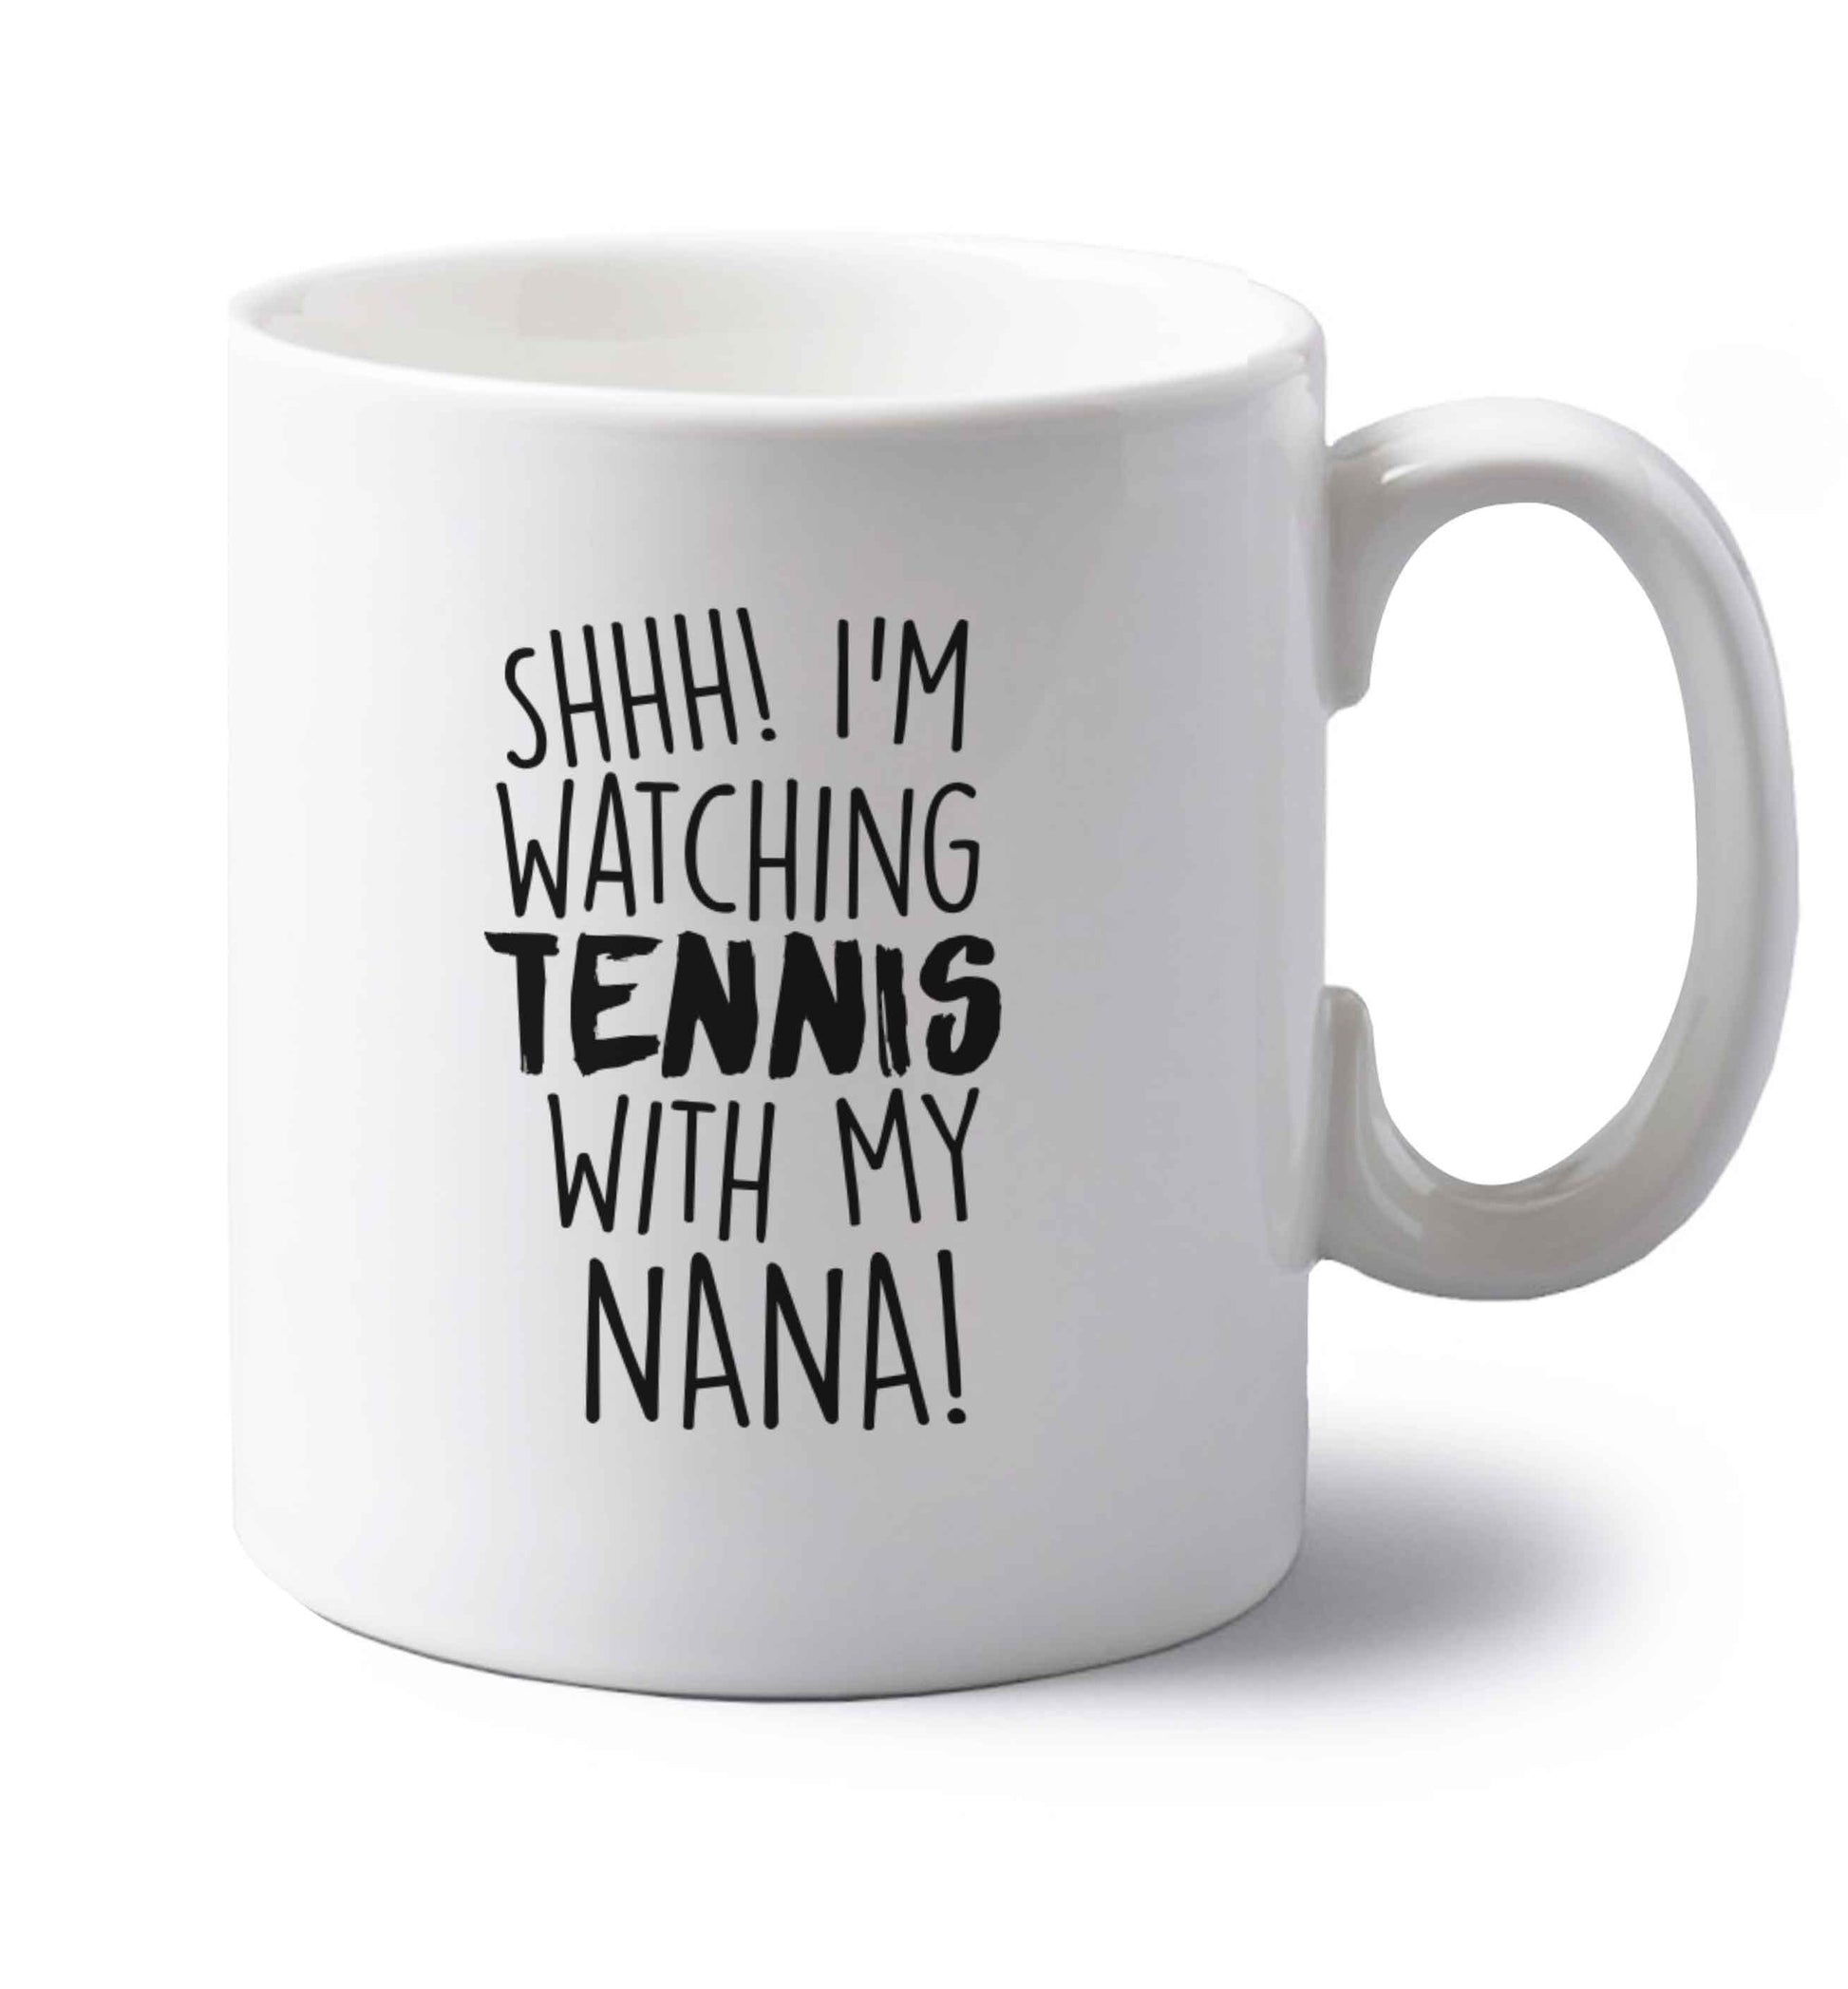 Shh! I'm watching tennis with my nana! left handed white ceramic mug 